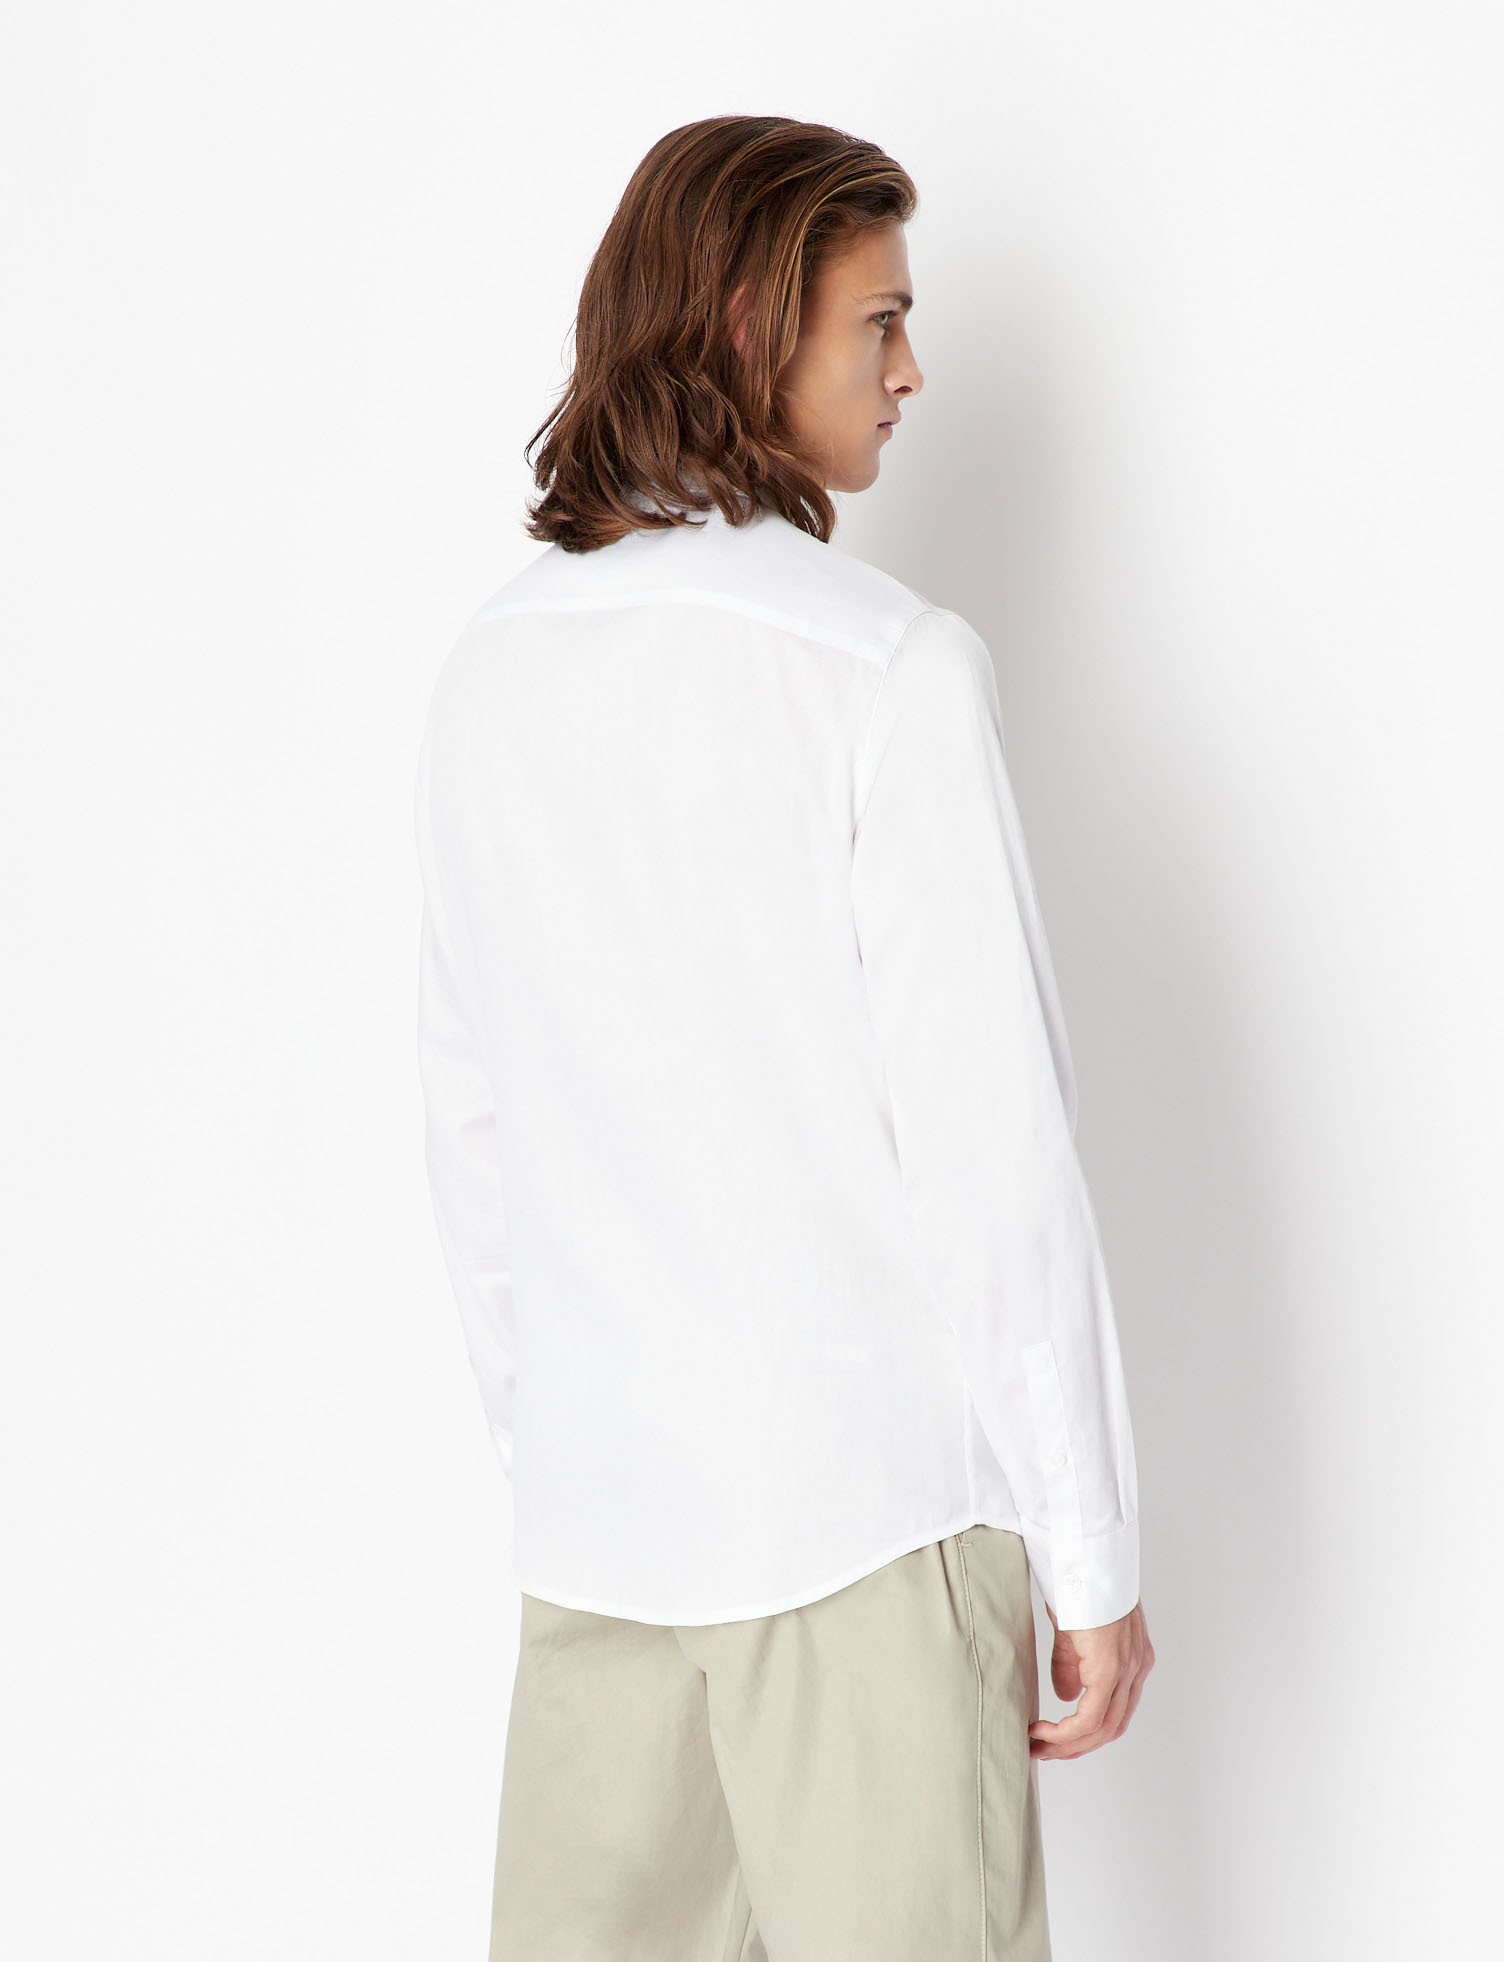 Armani Exchange - Slim fit shirt in cotton, White, large image number 2